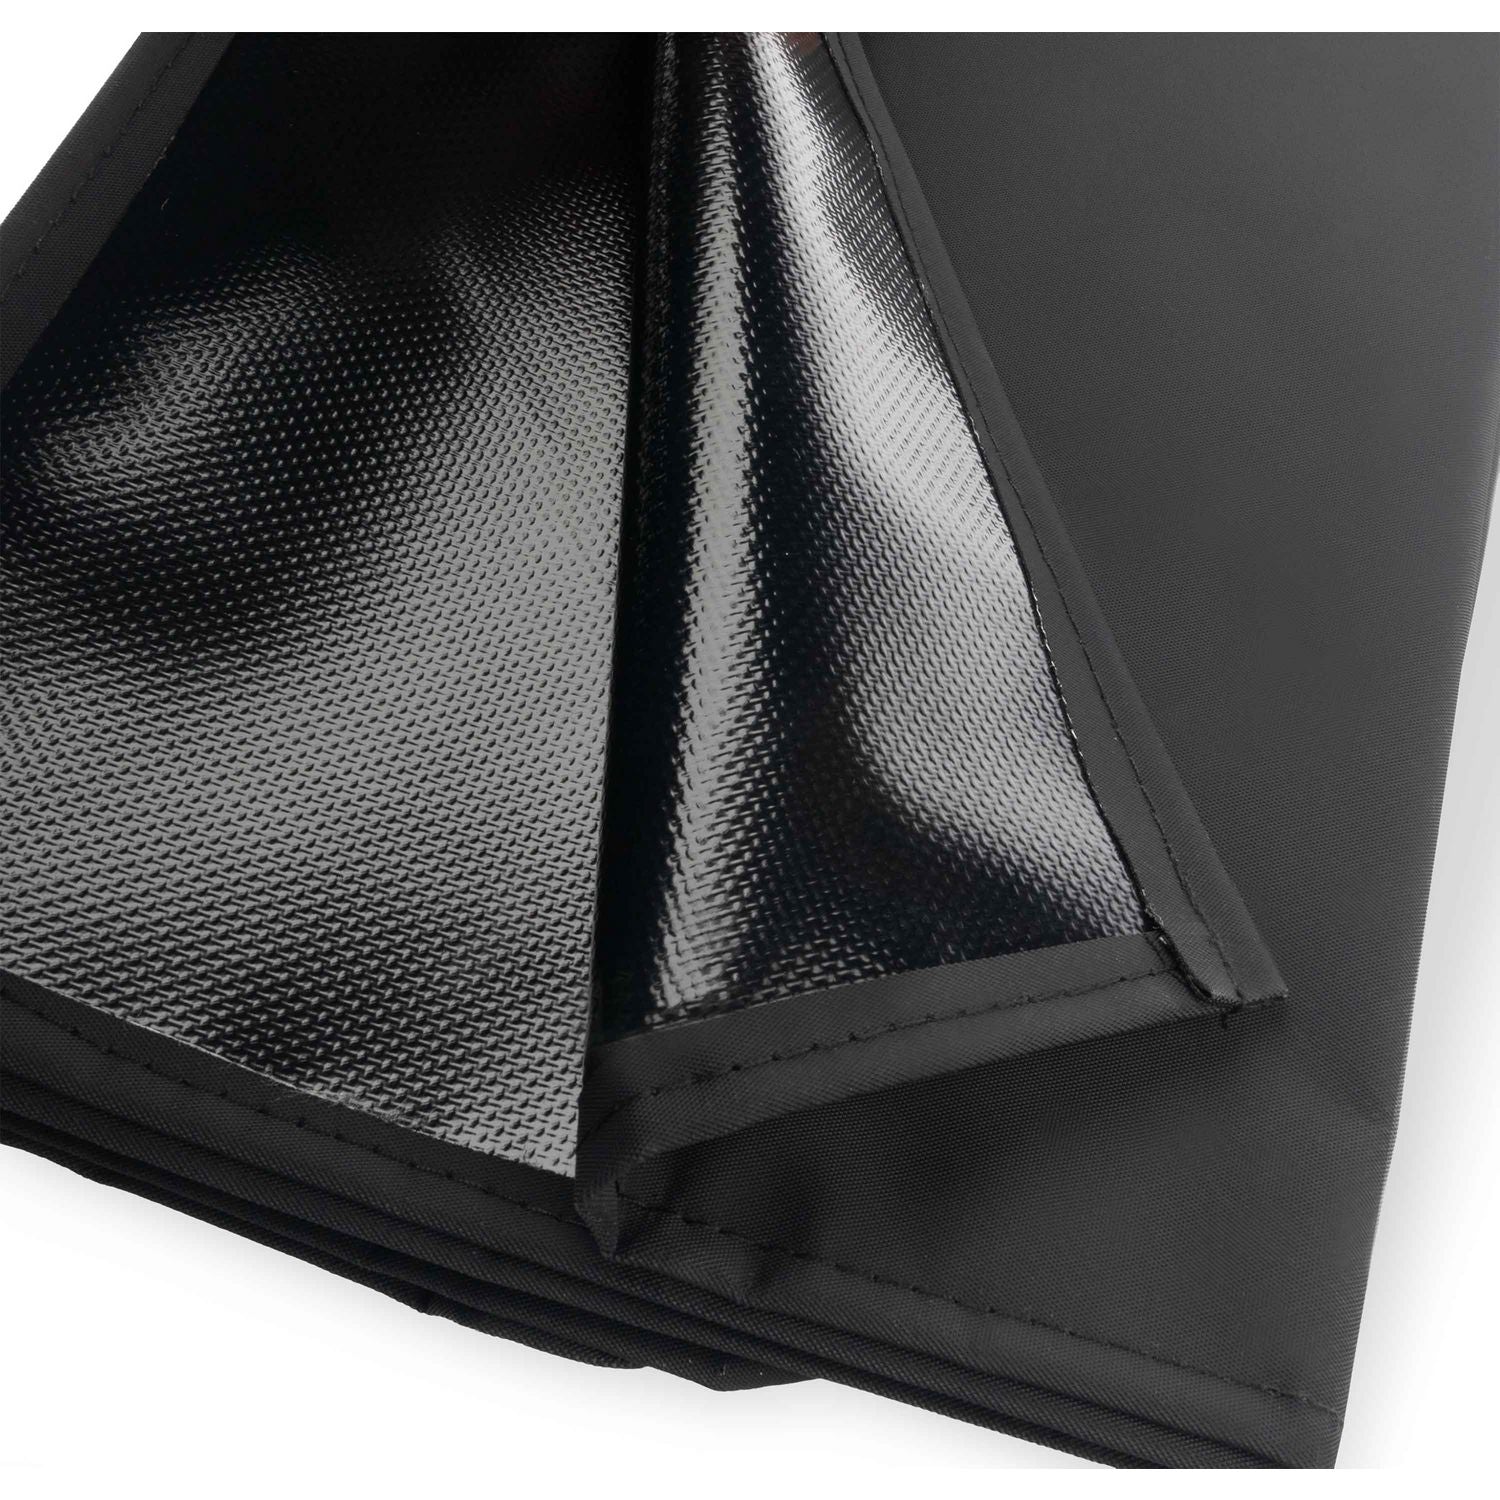 neoflex-apron-one-size-fits-all-black_sjm615nbabk - 4